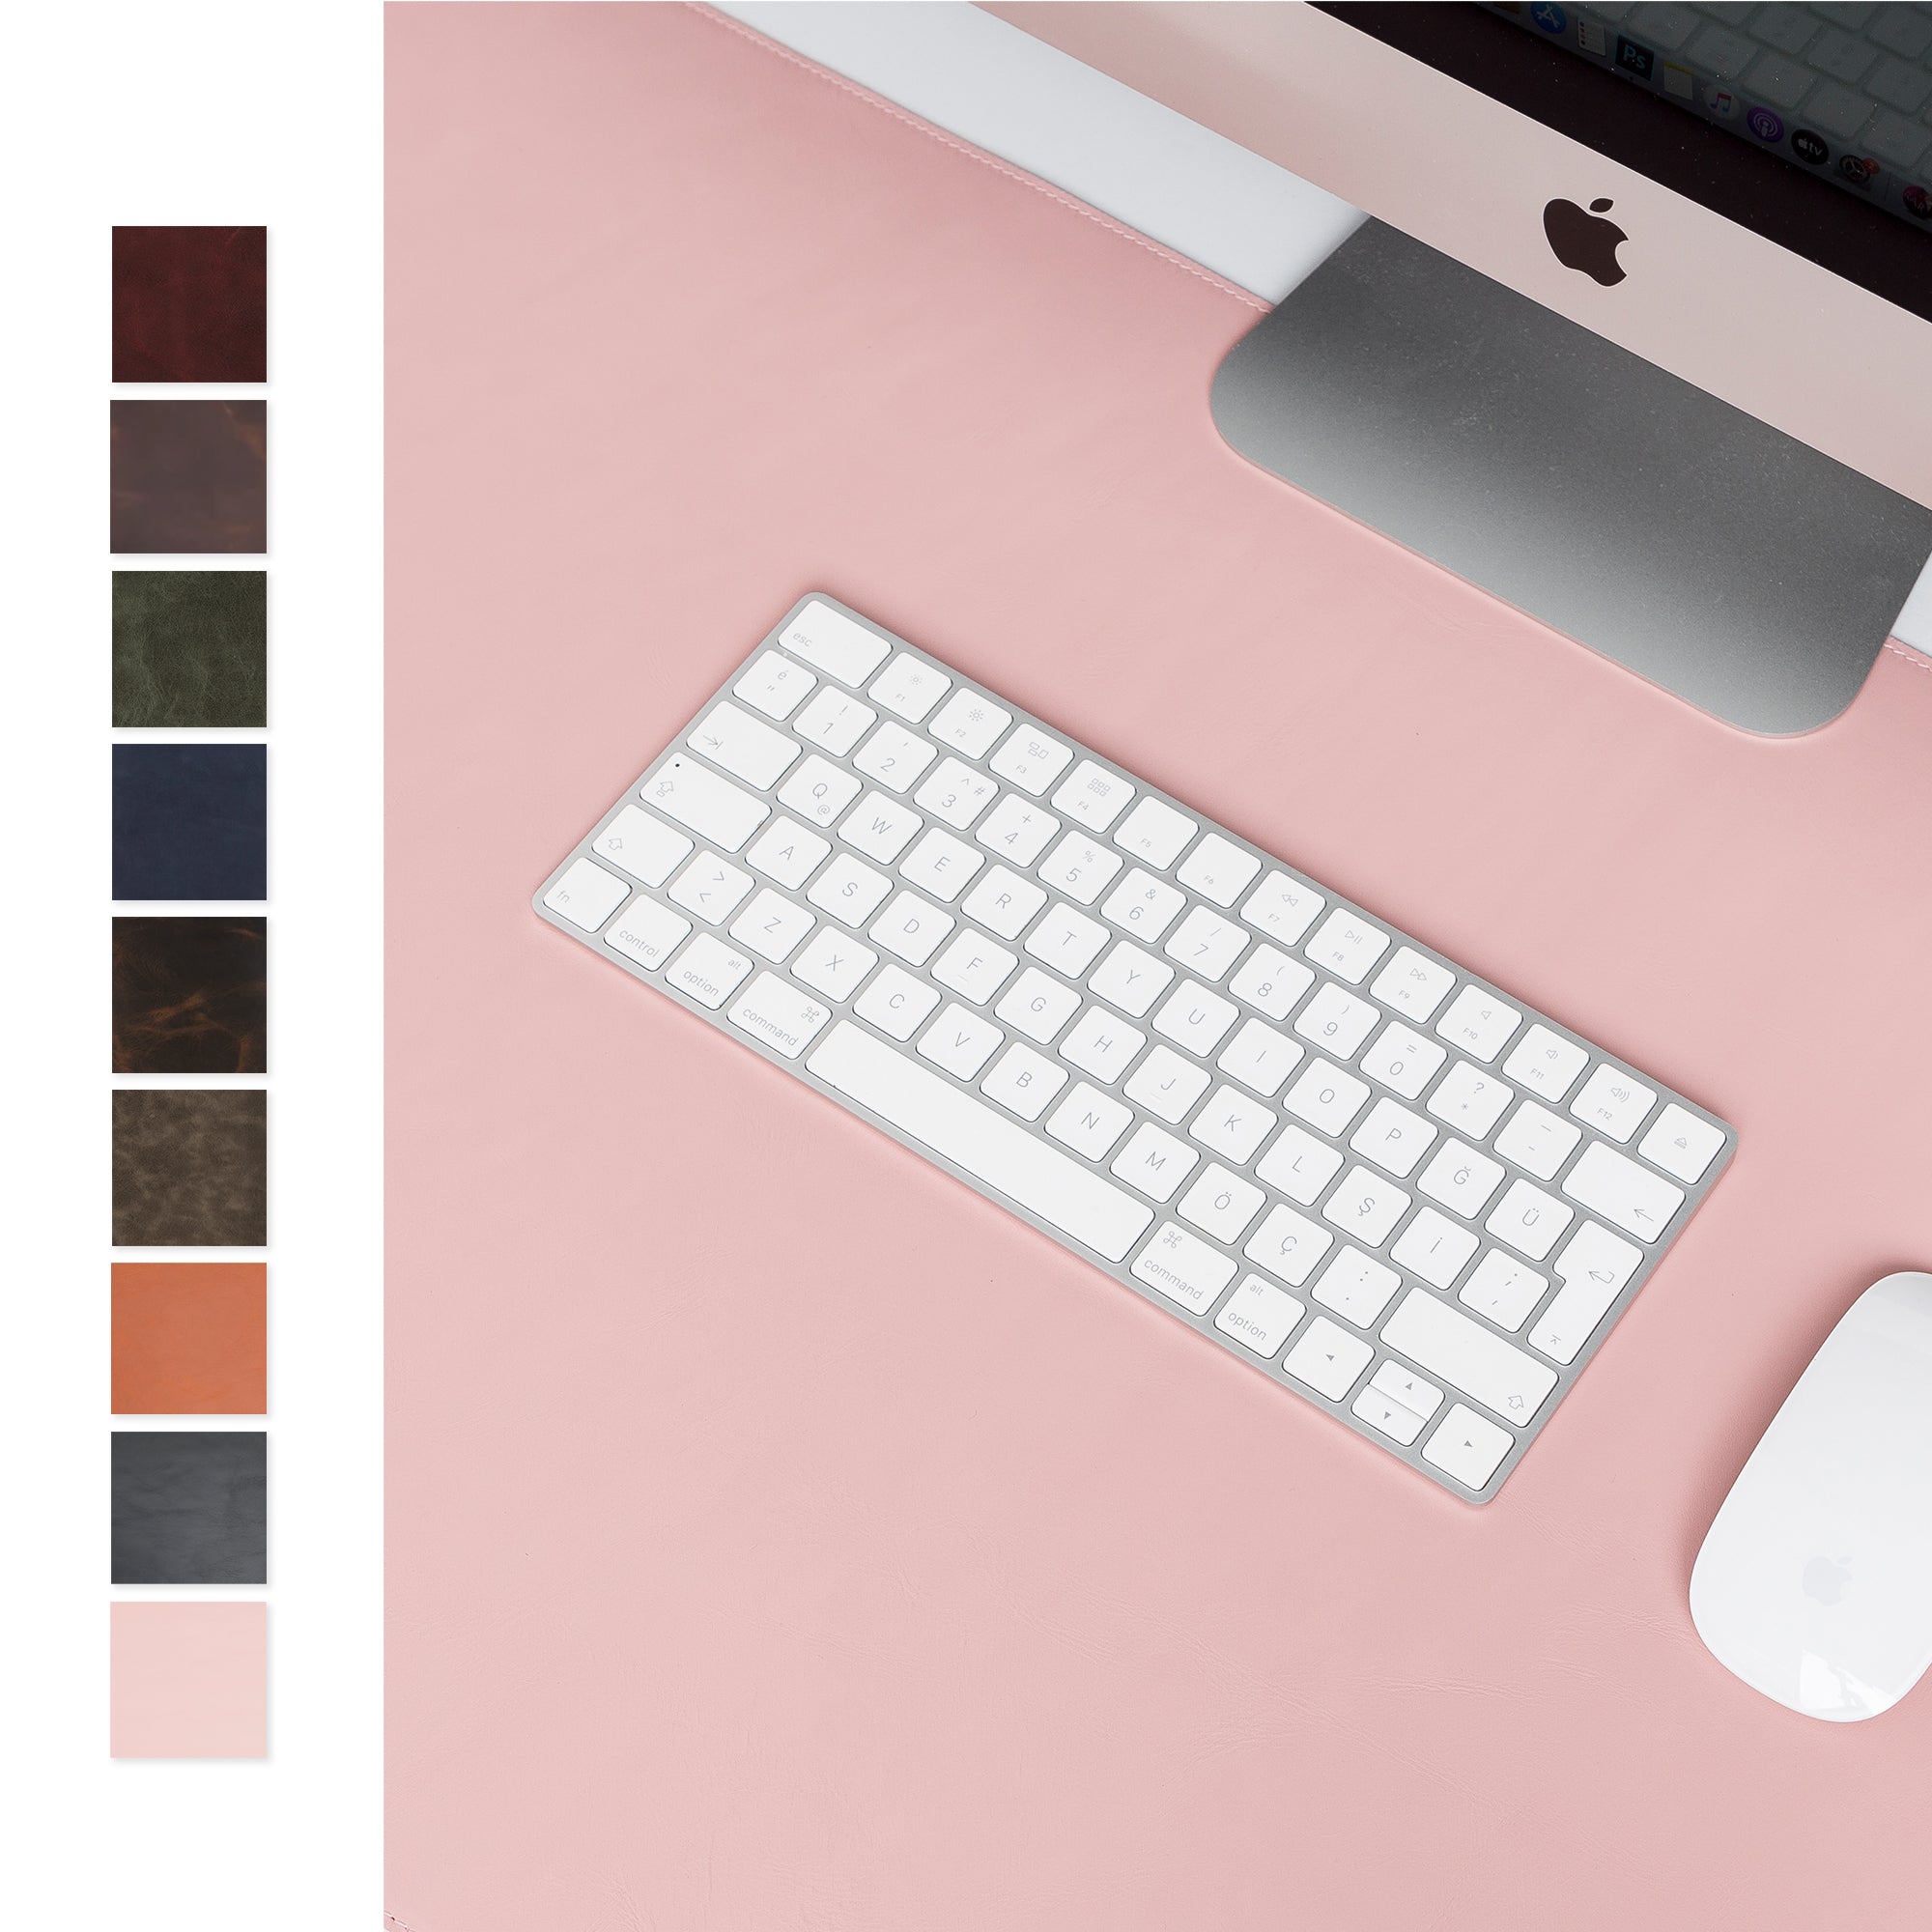 DelfiCase Genuine Leather Deskmat, Computer Pad, Office Desk Pad (Pink Nude) 10